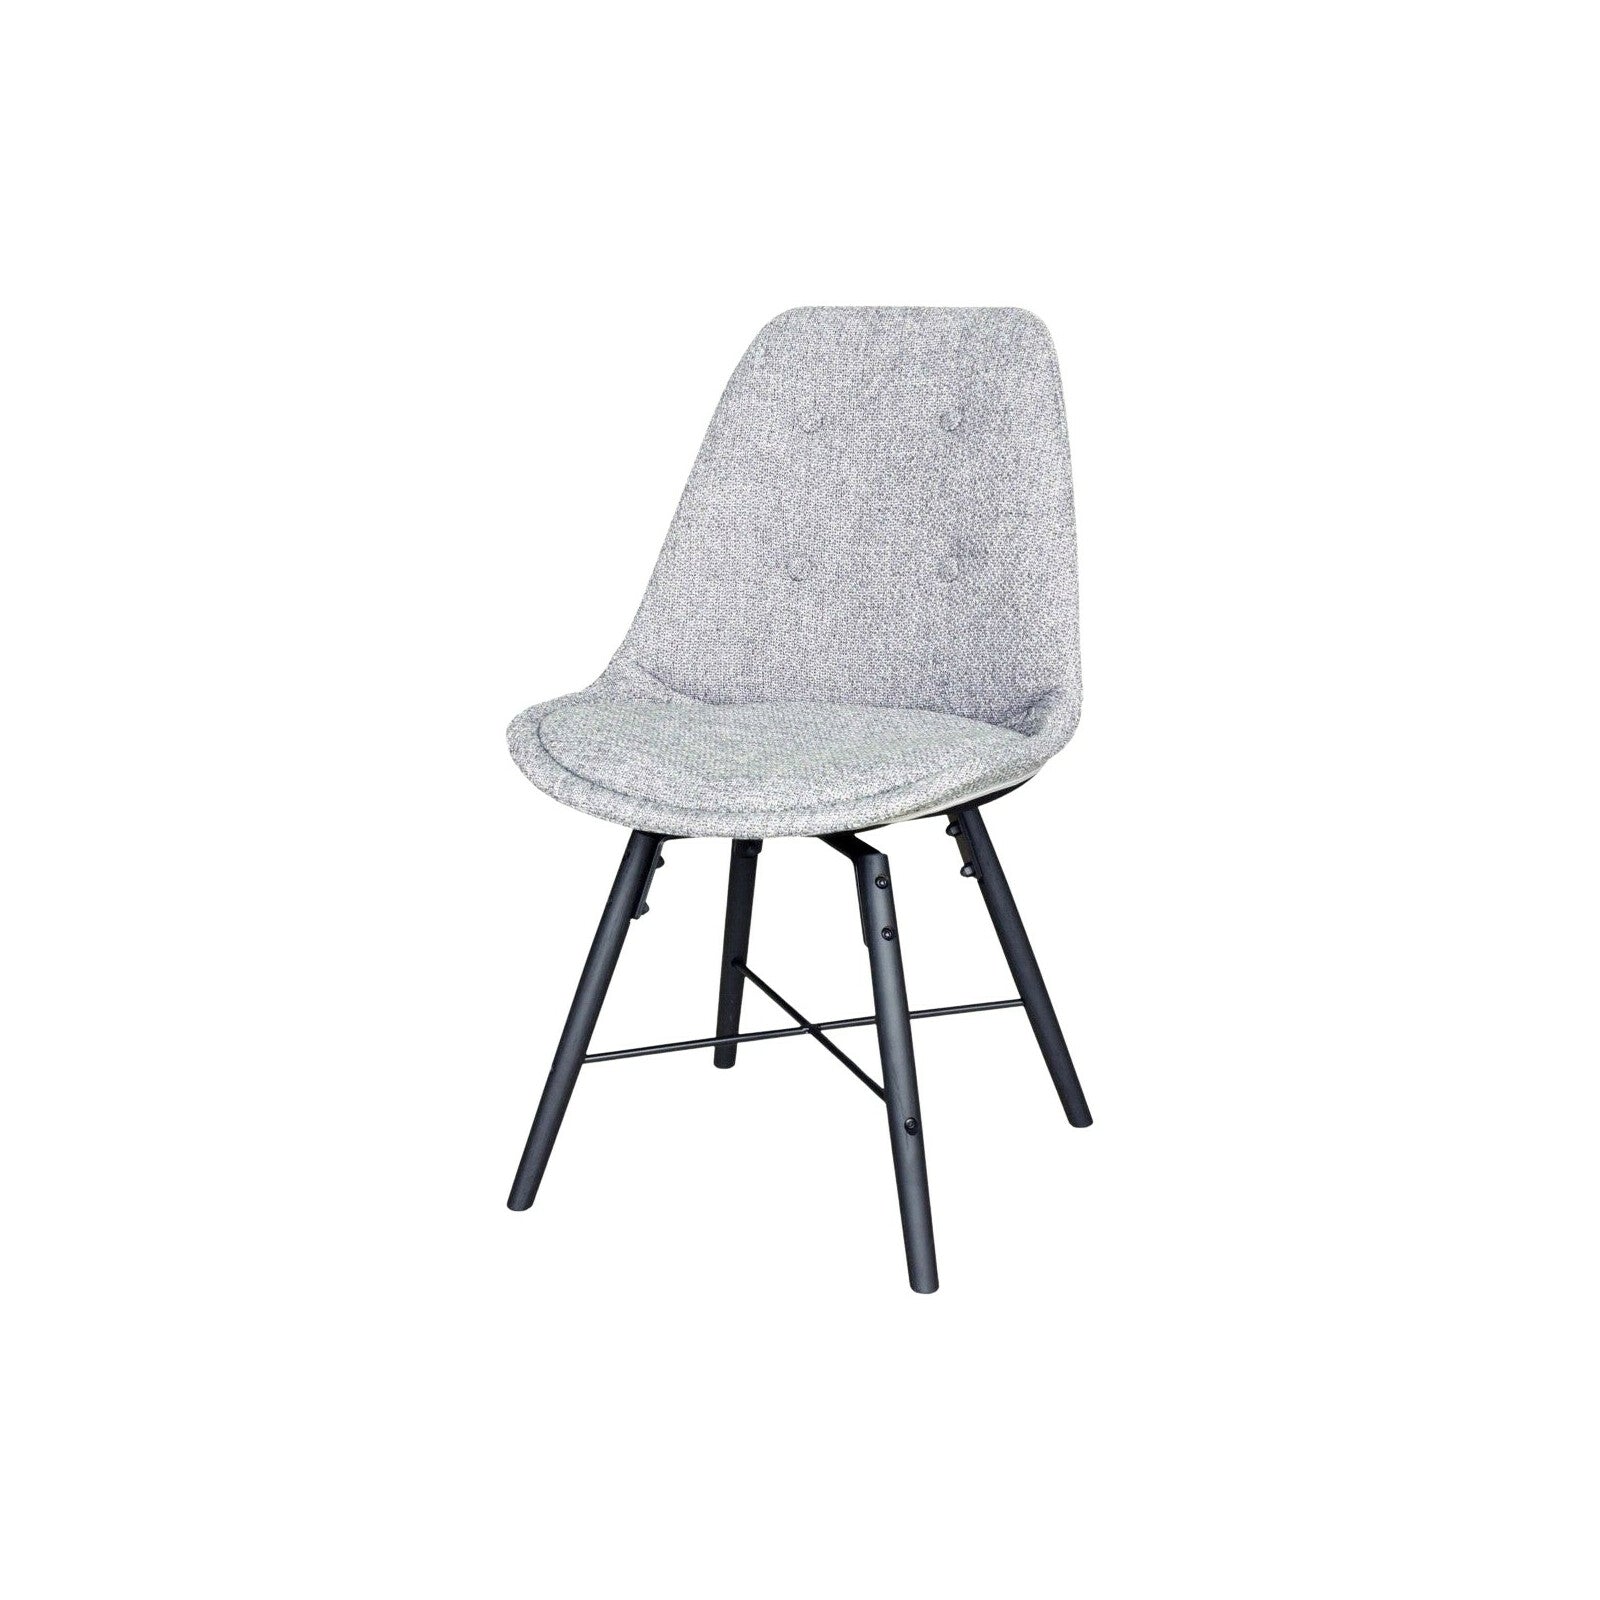 Design chair FORU - デザイナーズチェア - 4937294130150 - 3